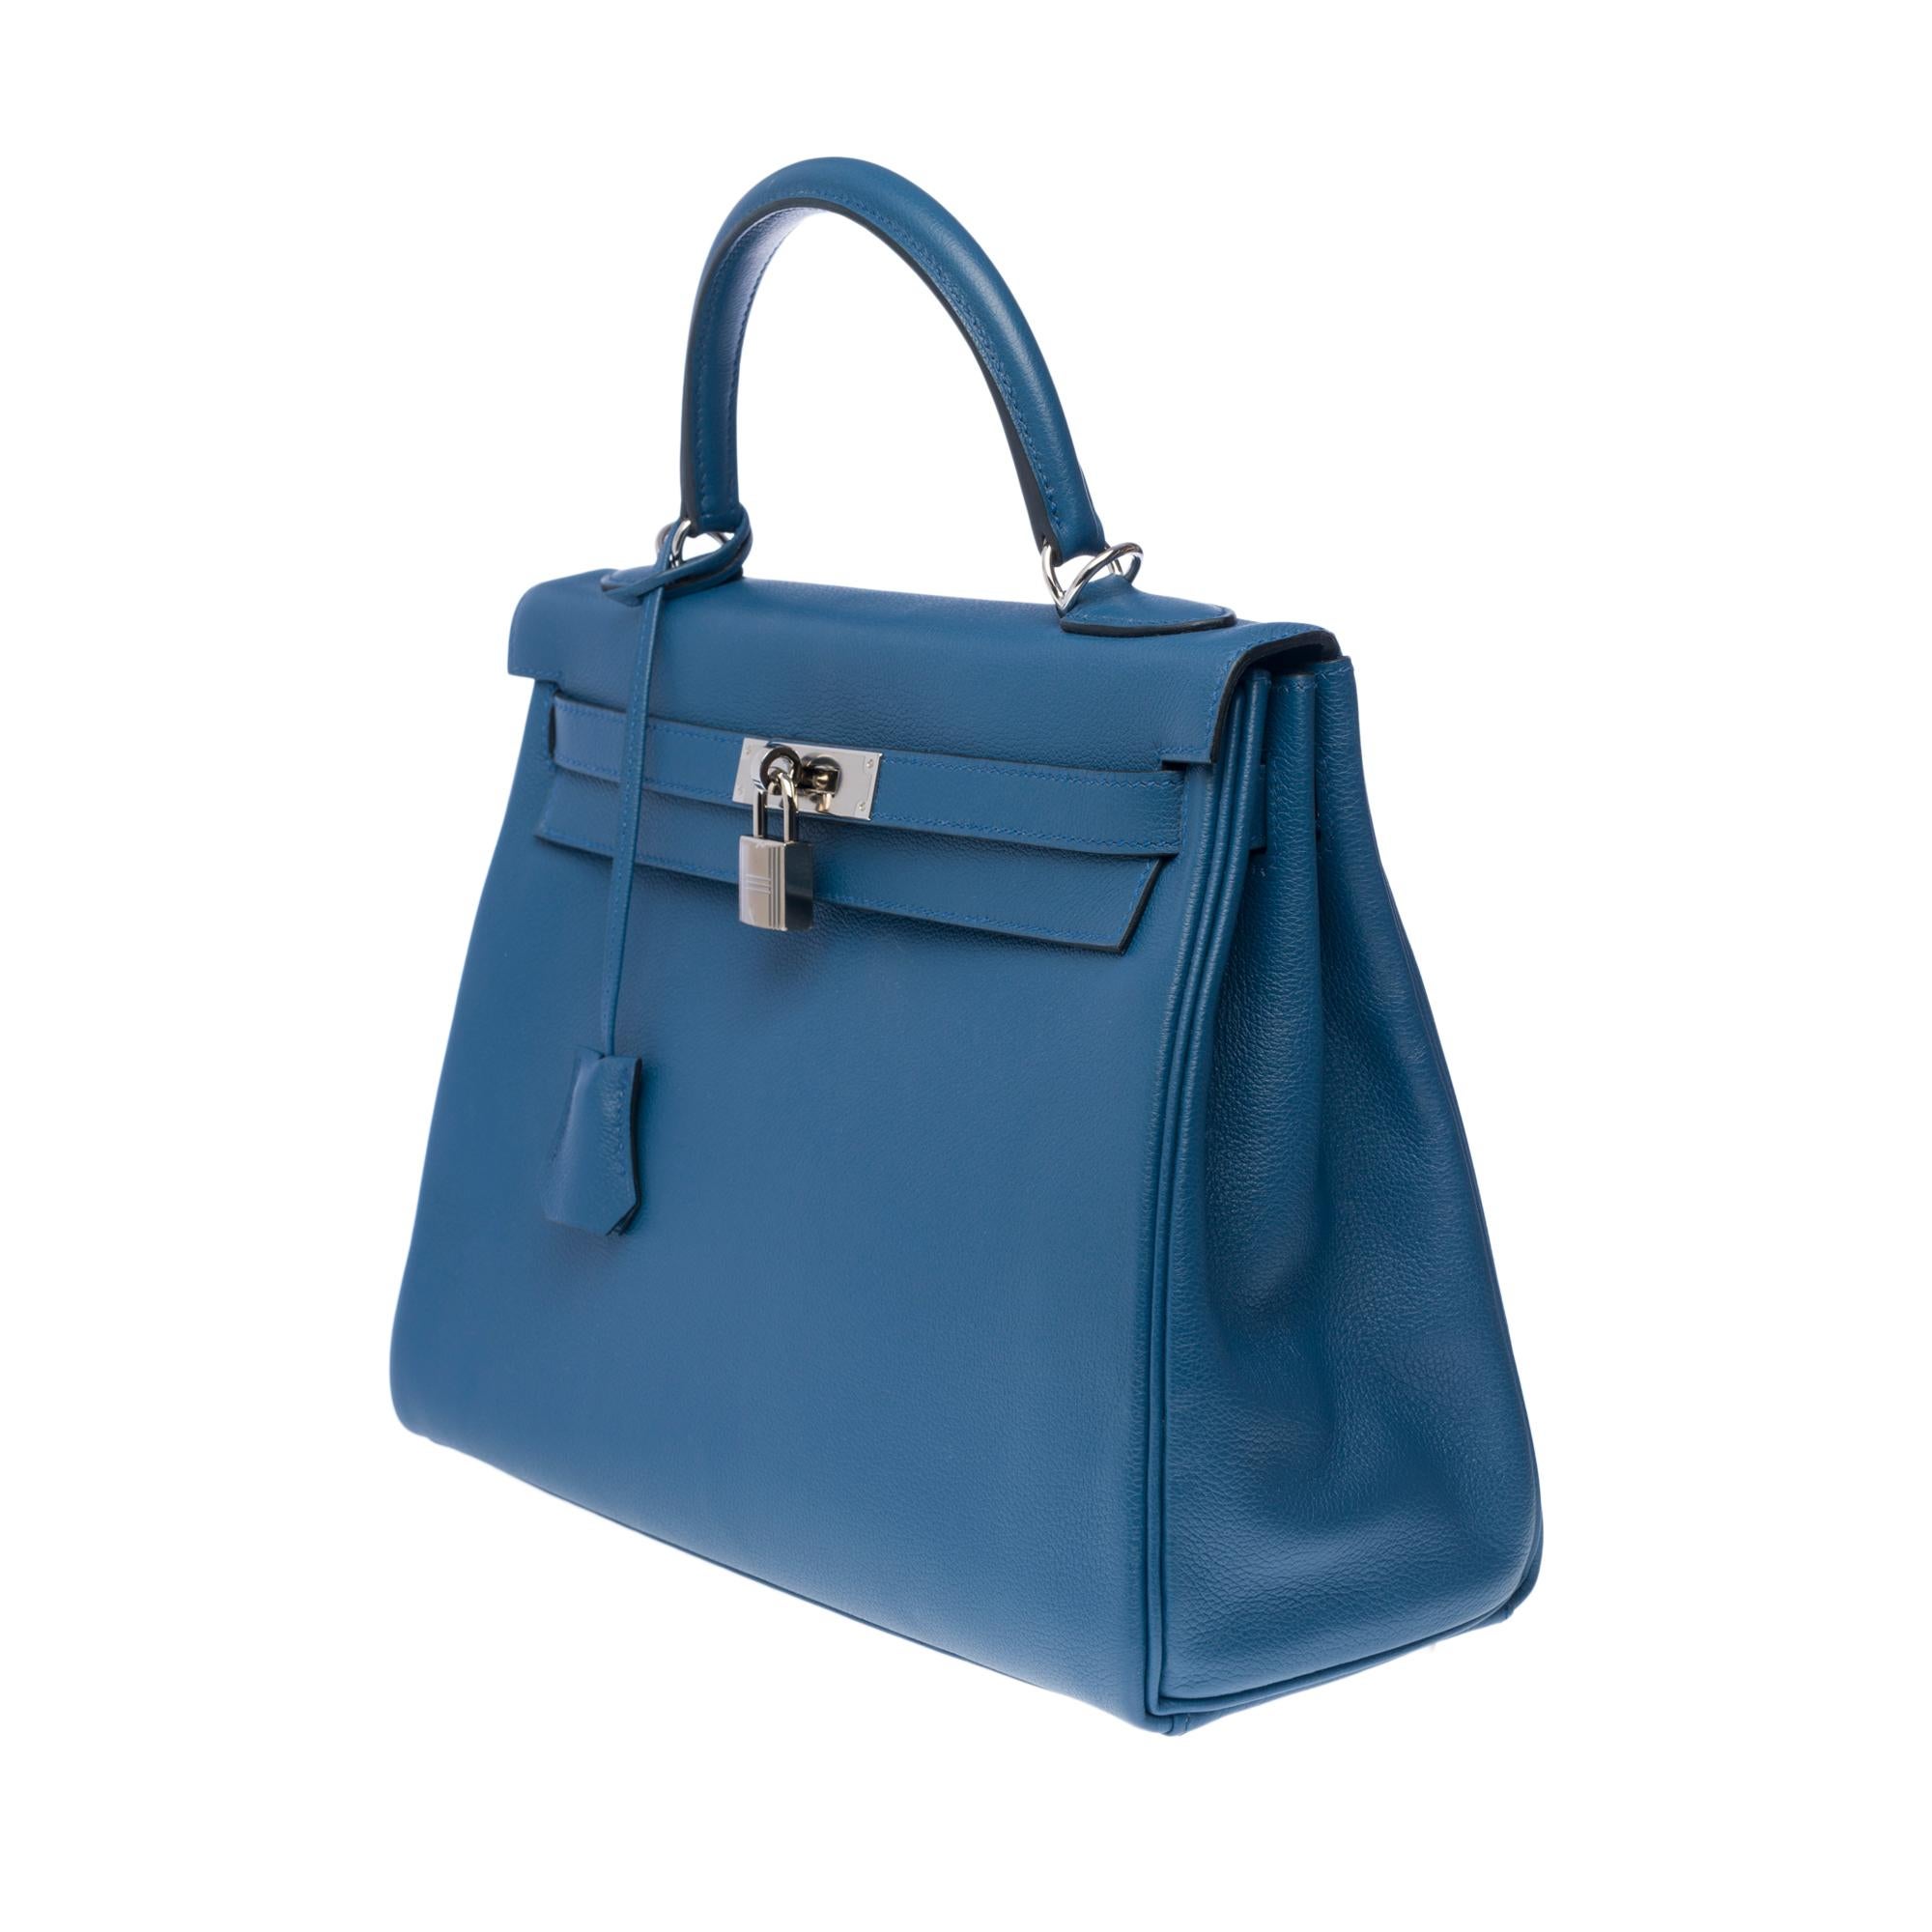 Orange Hermès Kelly 32cm handbag with strap in Evercolor blue Agate leather, SHW